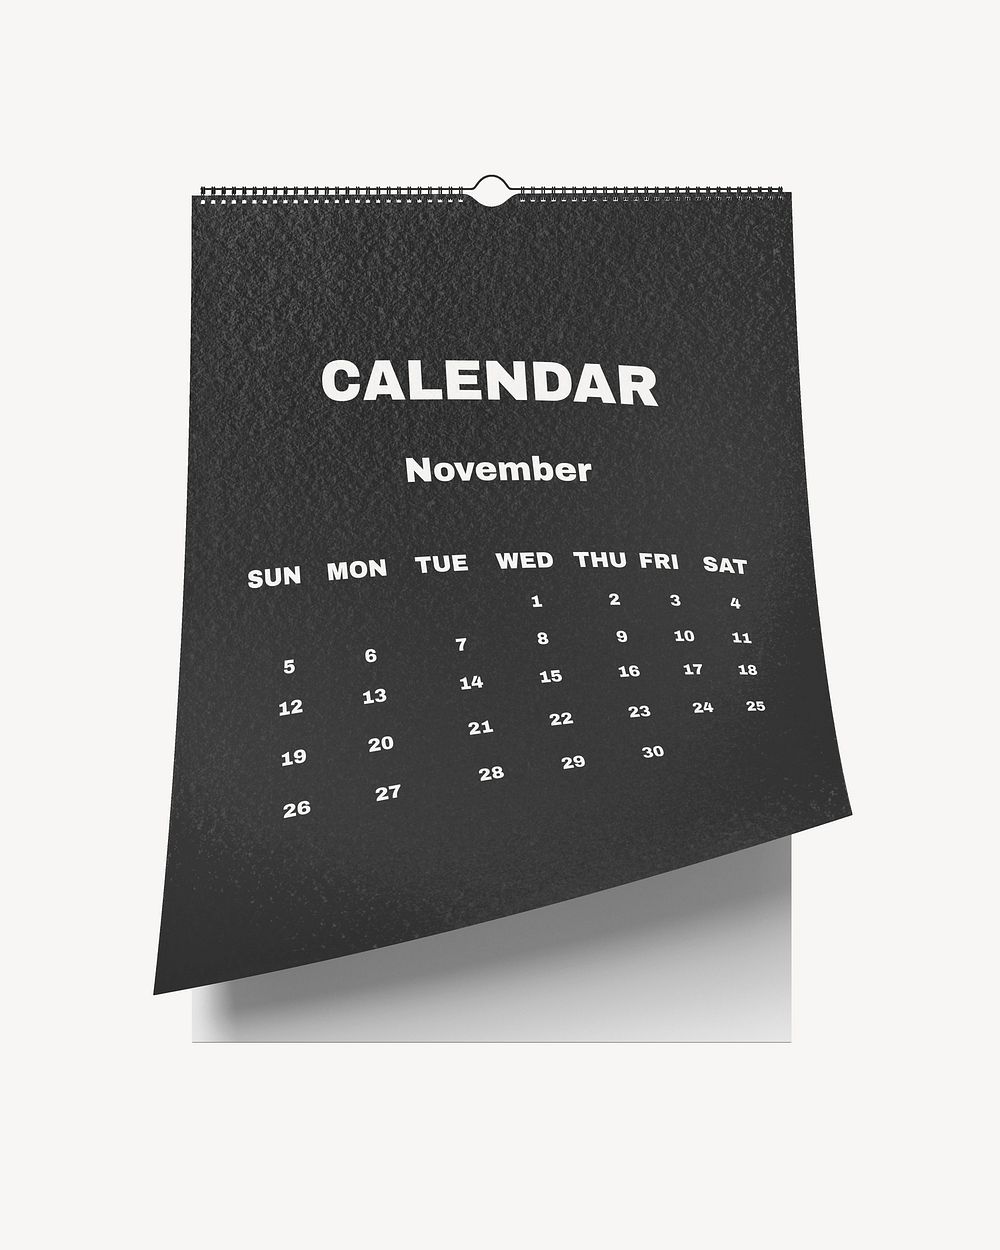 Wall calendar mockup, black 3D design psd